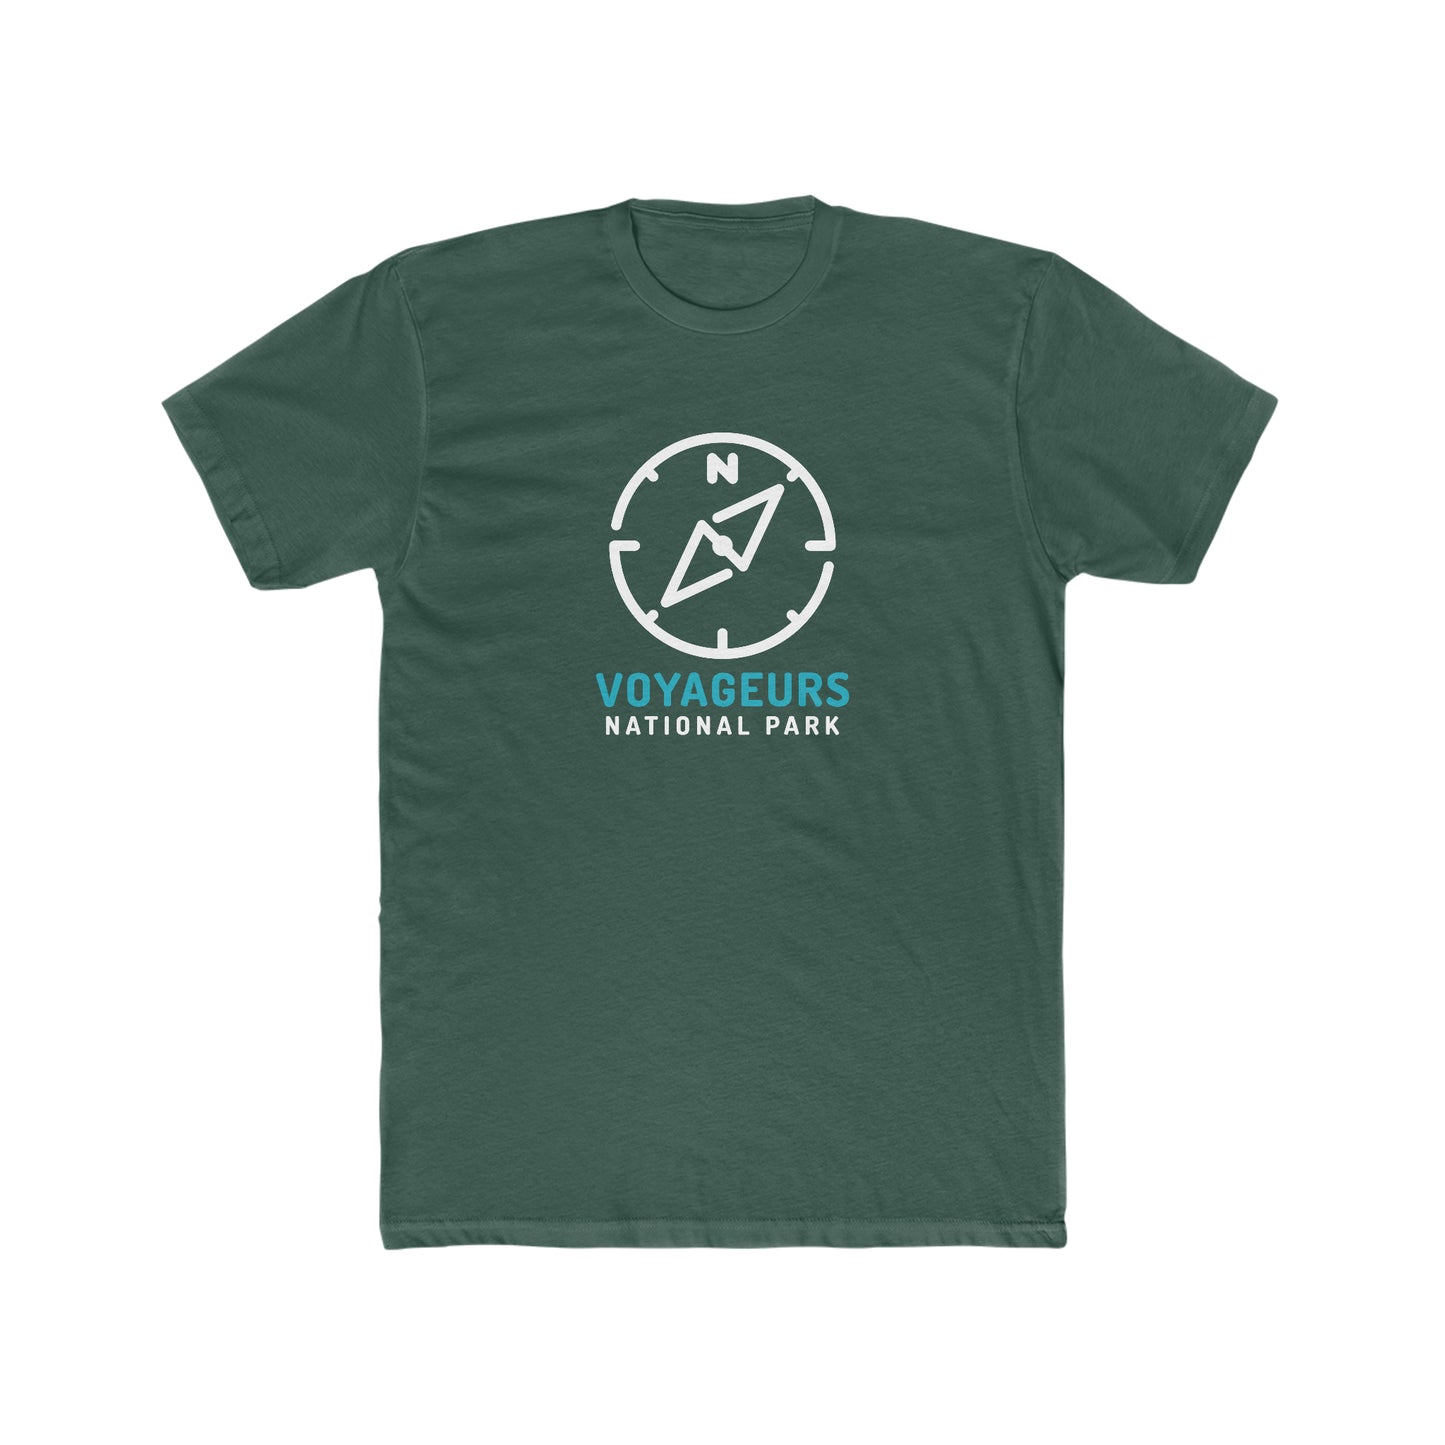 Voyageurs National Park T-Shirt Compass Design